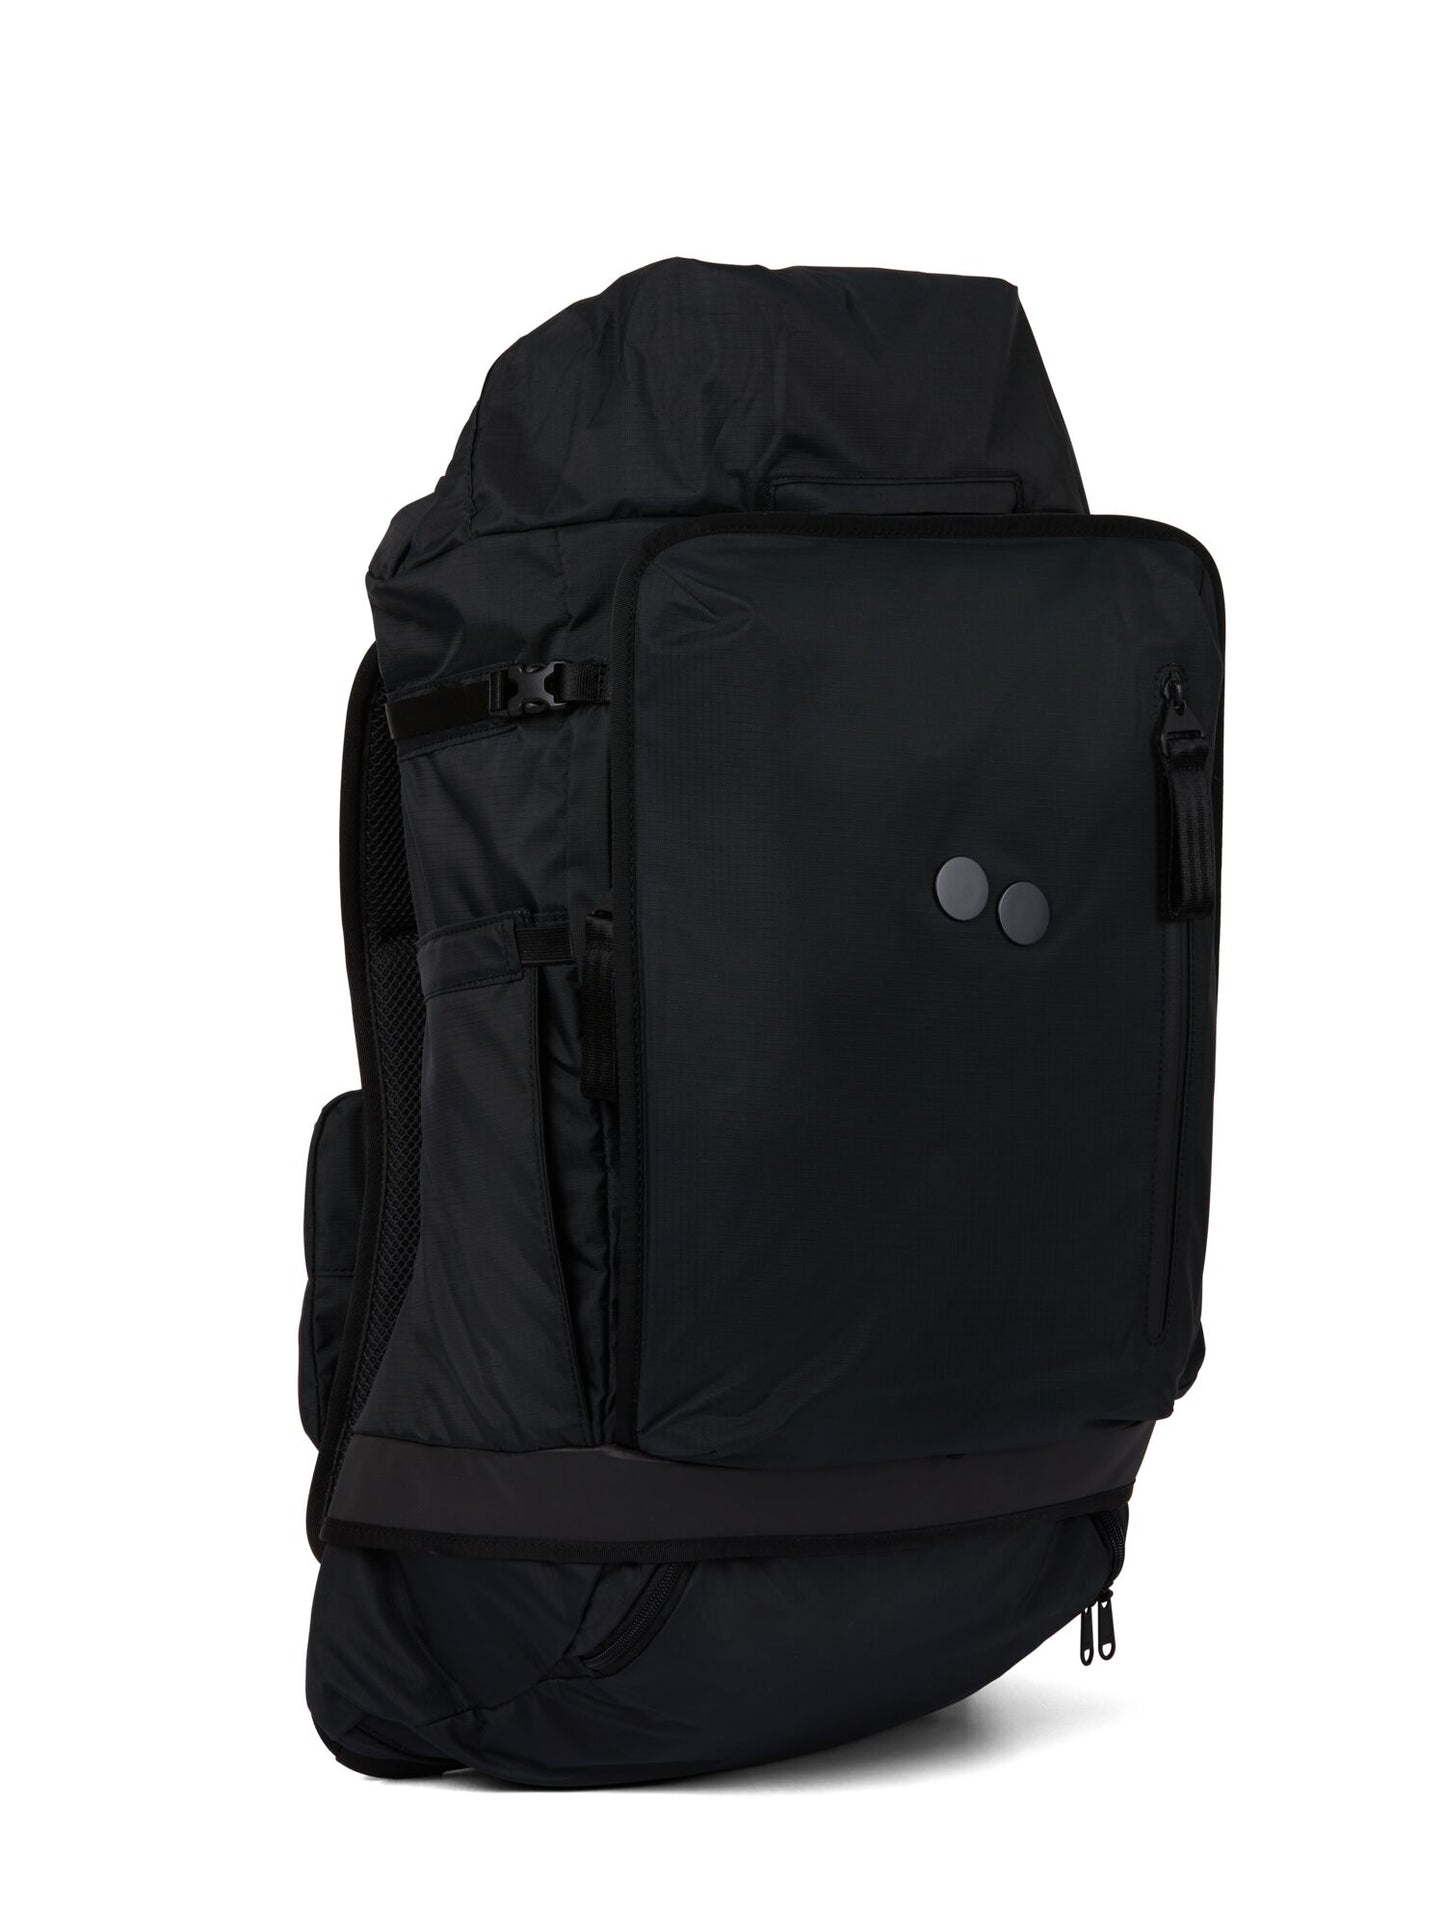 pinqponq-backpack-komut-large-pure-black-front